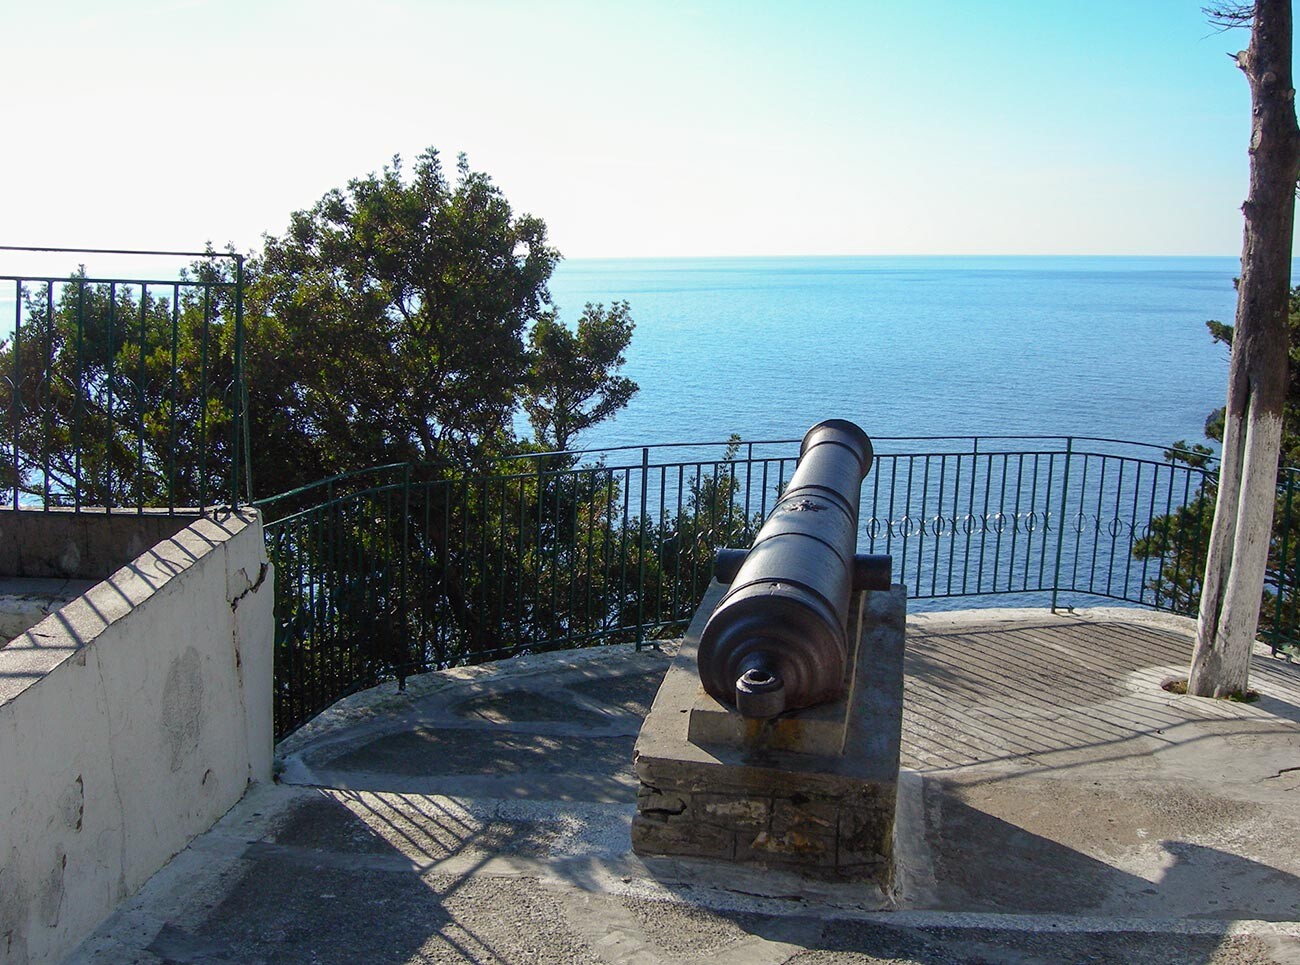 A Russian gun from the Russian-Ottoman occupation of Corfu.